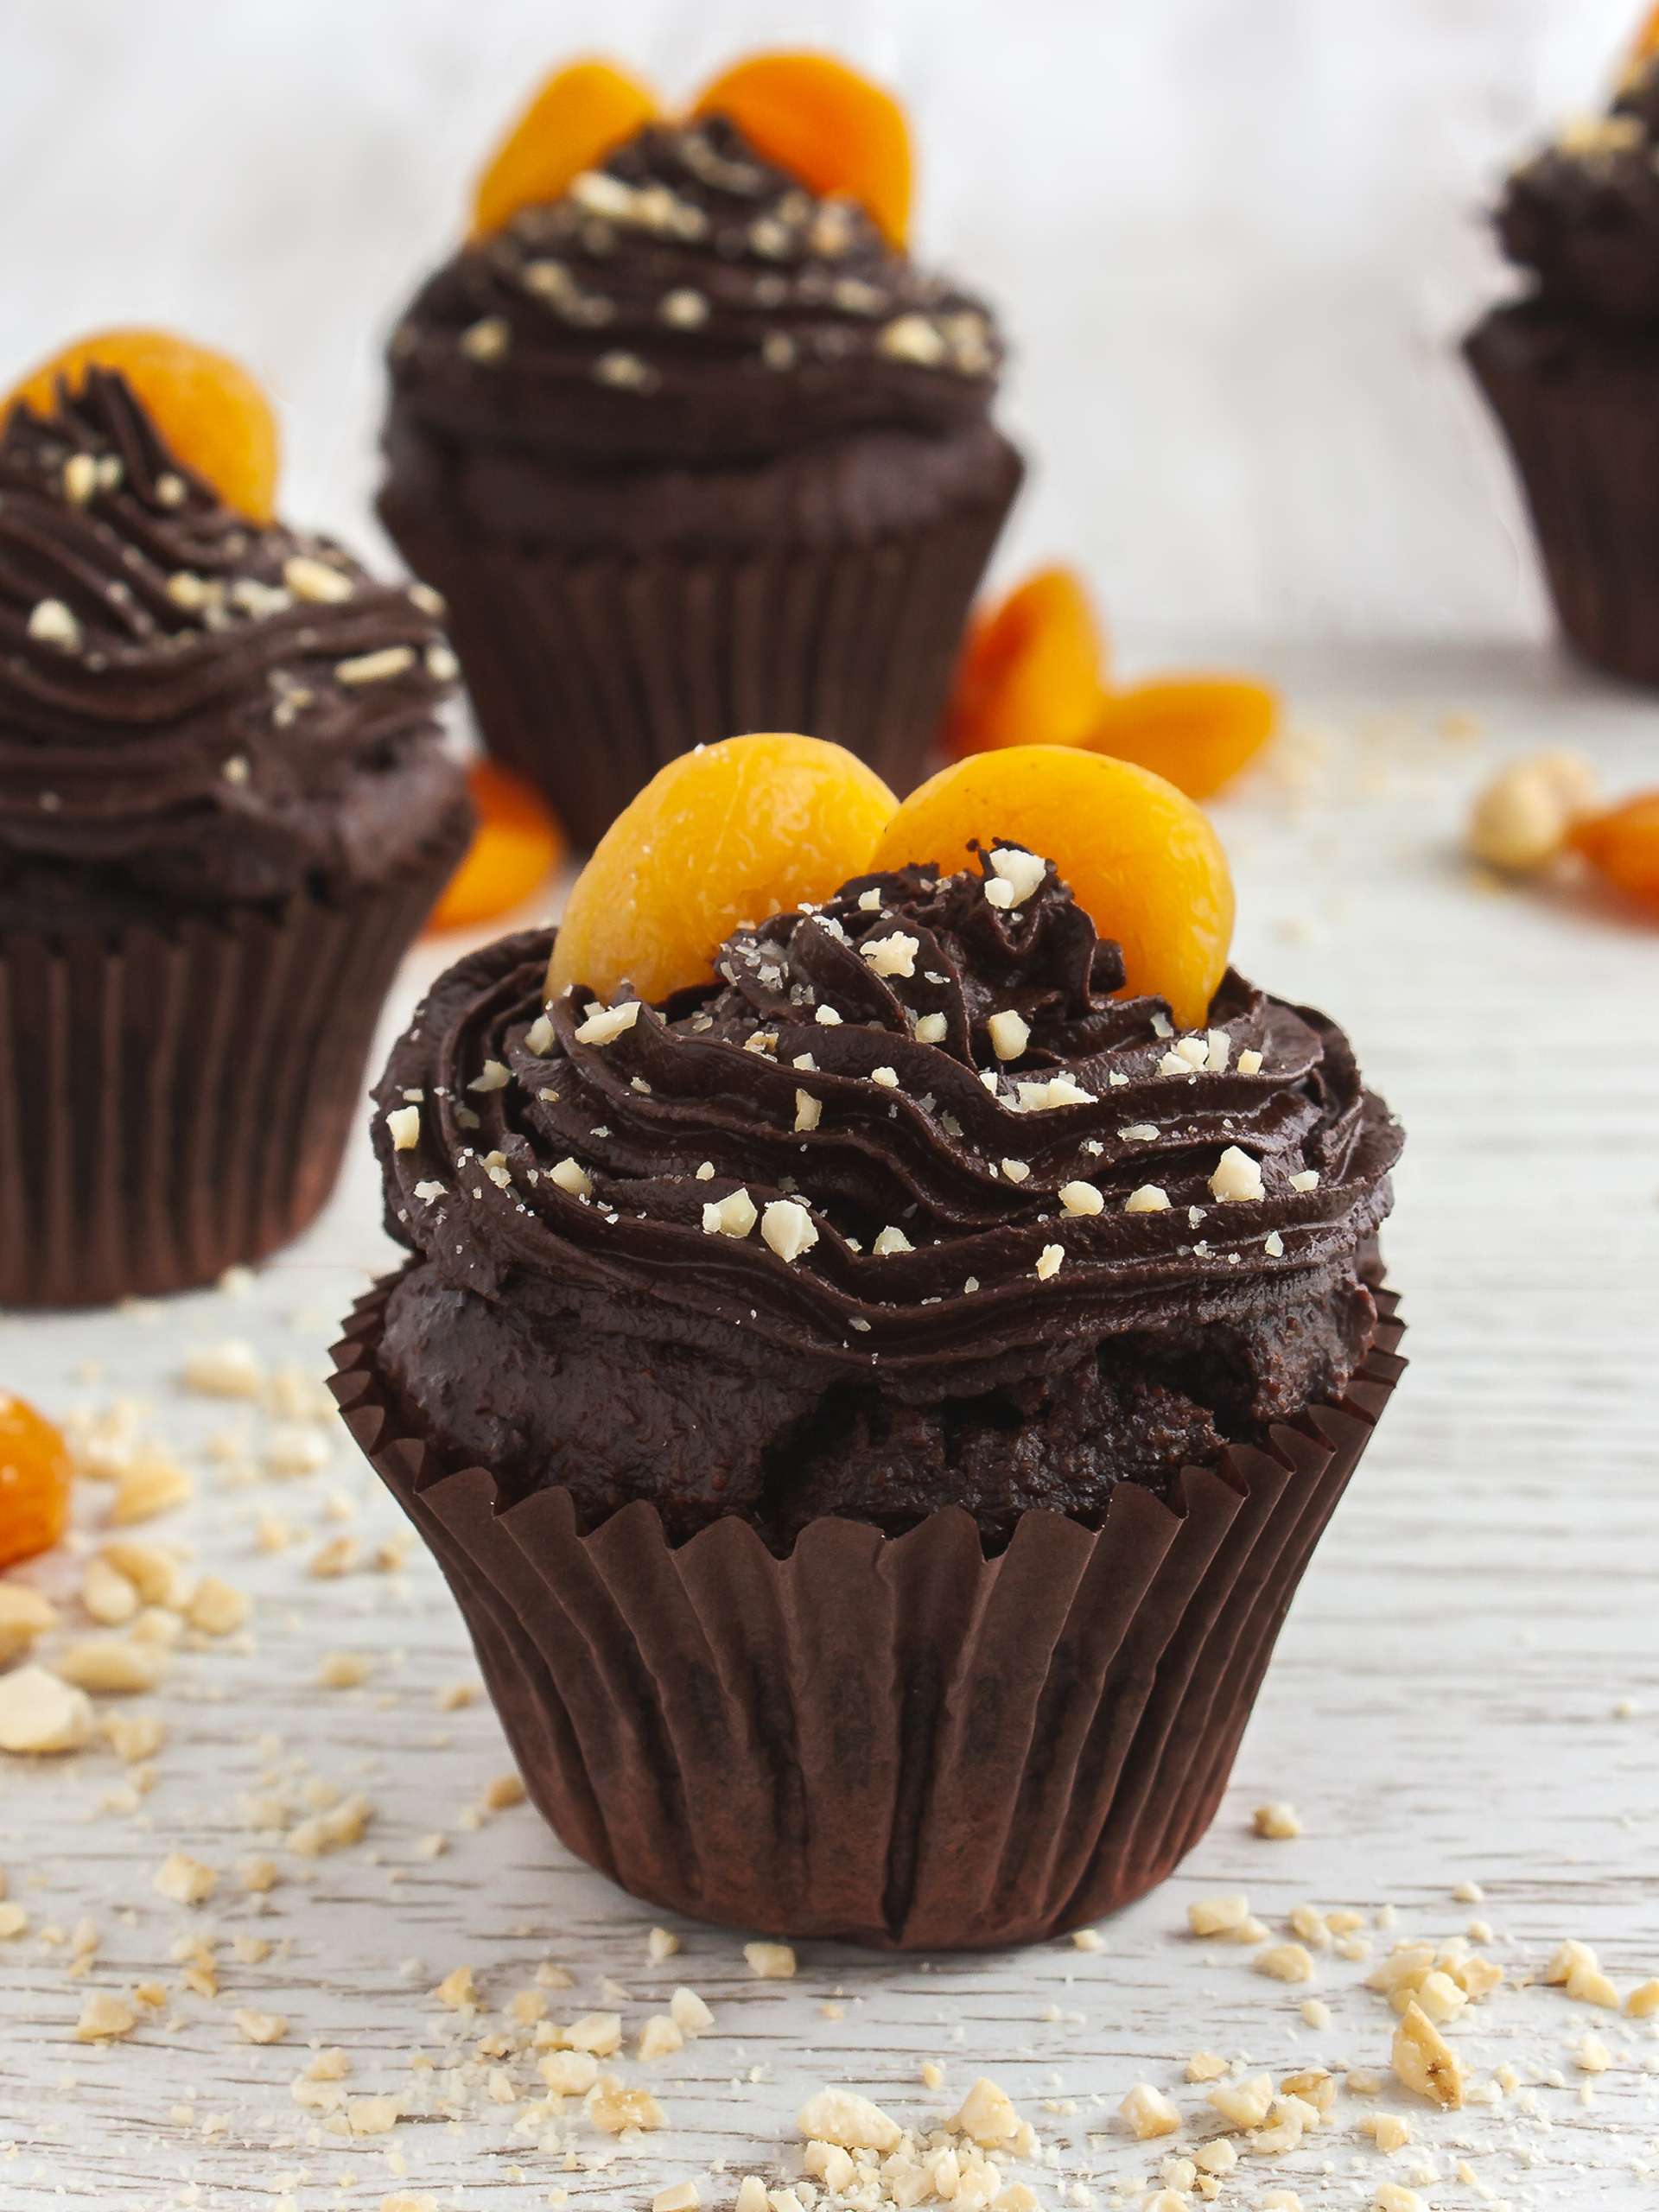 Gluten Free Vegan Chocolate Cupcakes with Apricot Jam Recipe